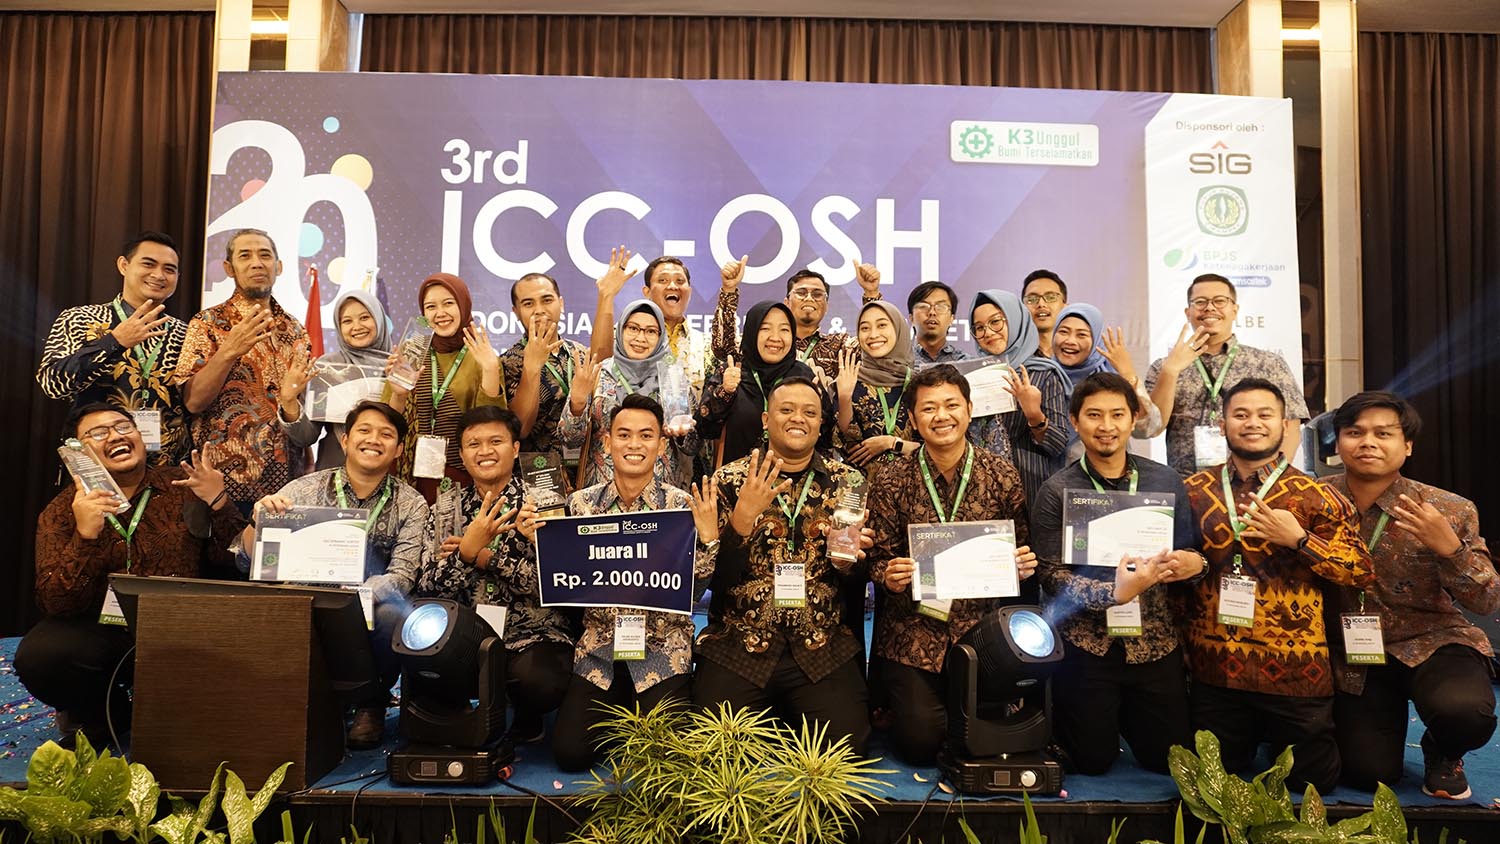 Para Gugus Inovasi Petrokimia Gresik usai Meraih Penghargaan dalam Ajang Indonesian Conference & Competition Occupational Safety and Health (ICCOSH) 2023 di Malang